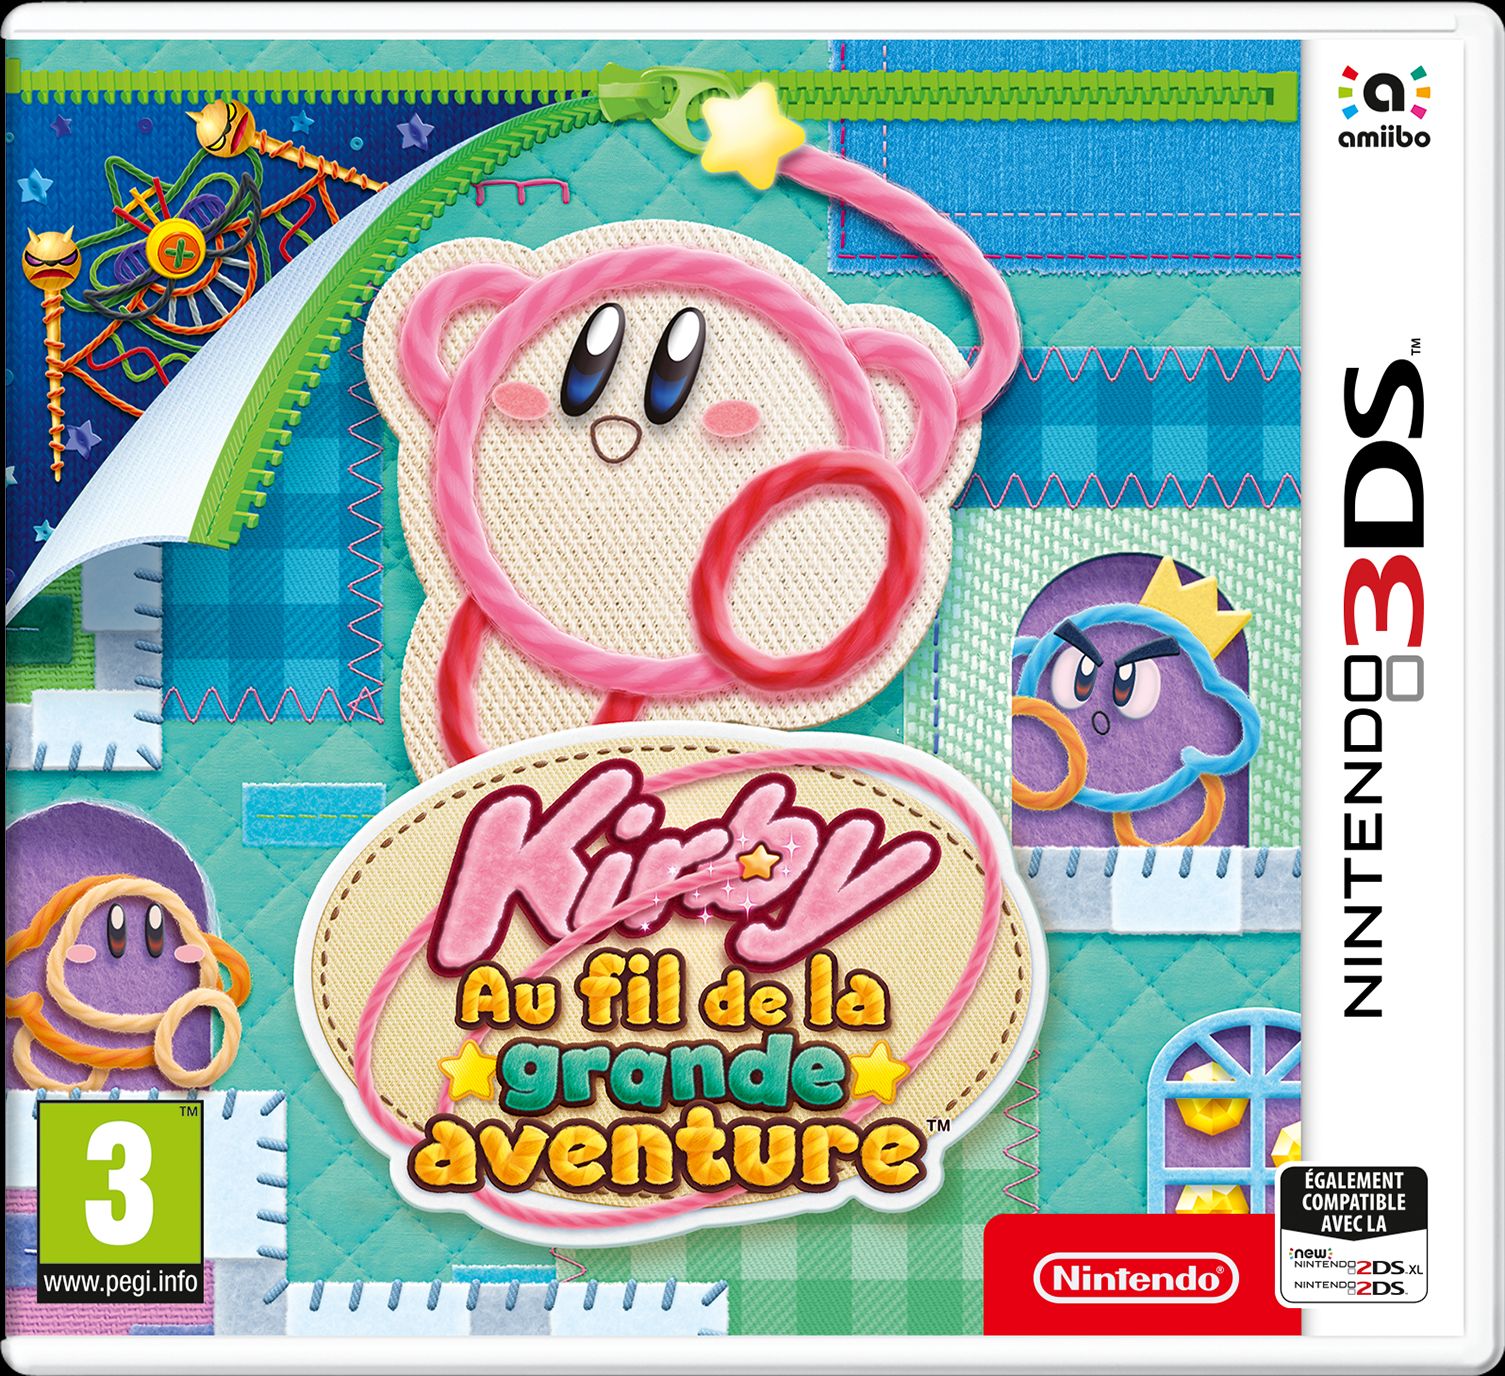 Kirby's : Au fil de la grande aventure